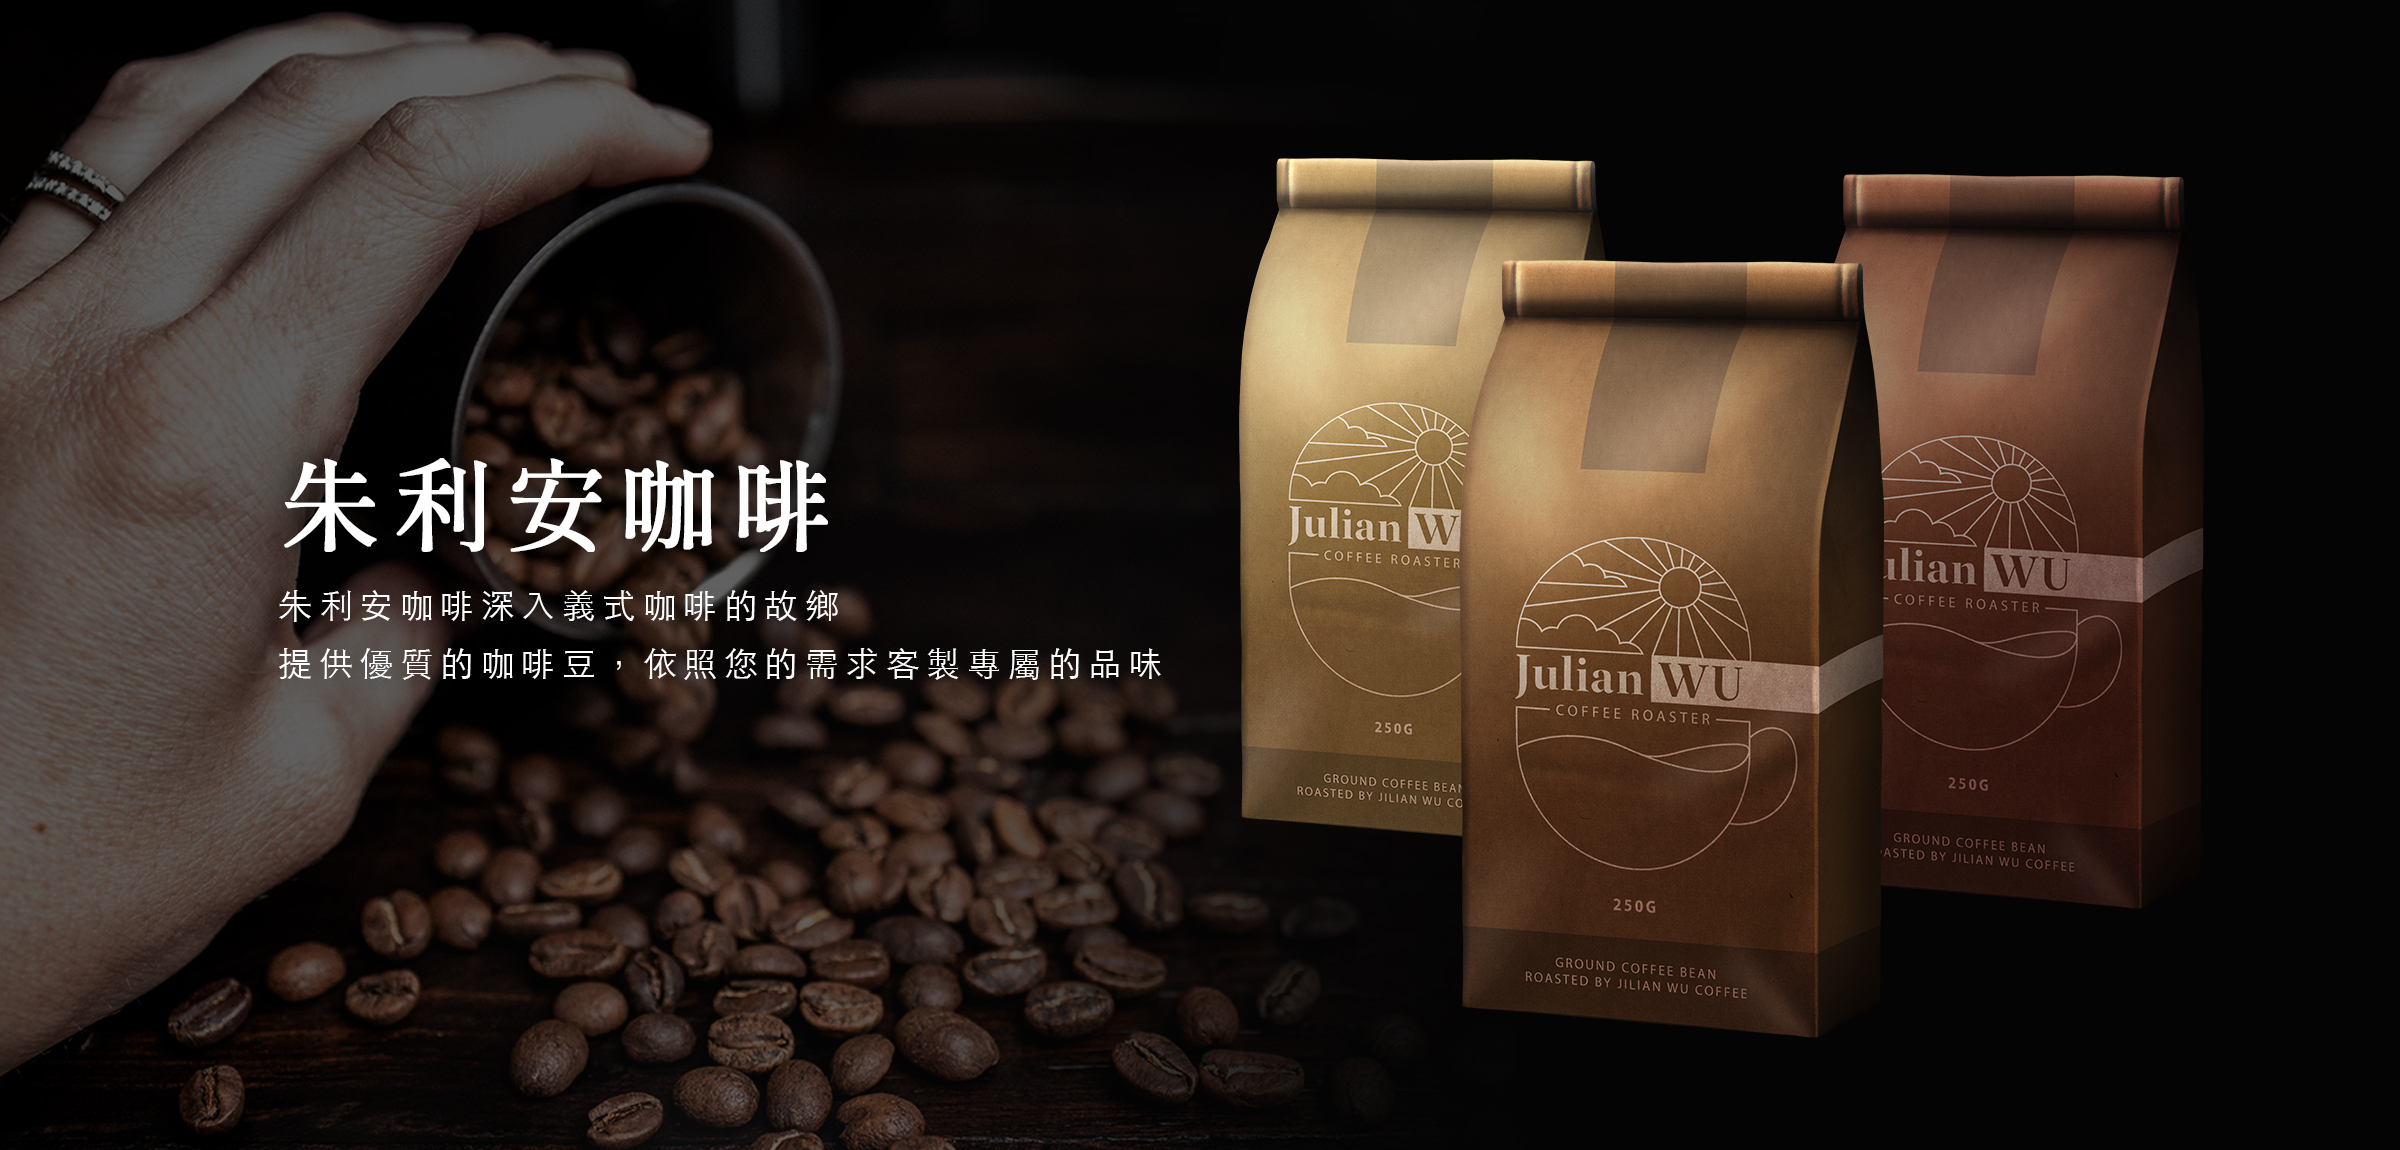 Julian Wu Coffee